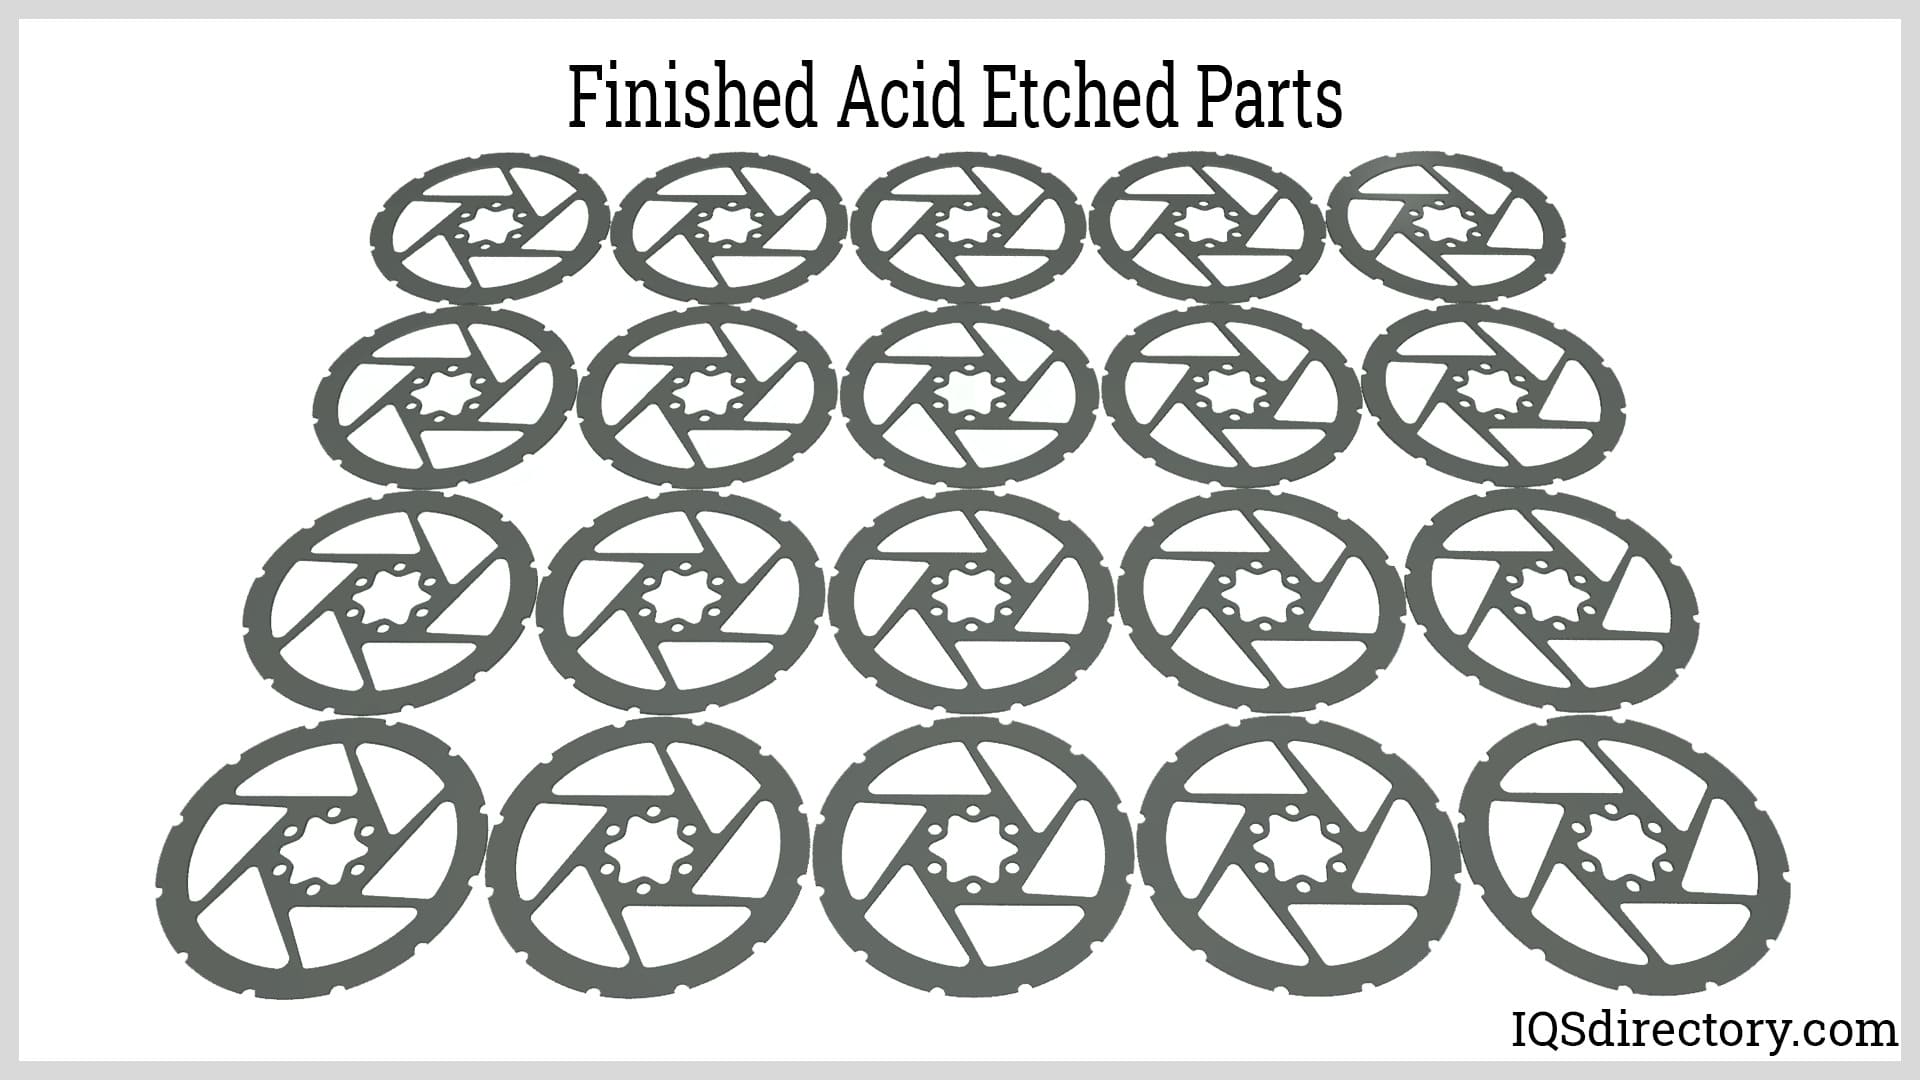 Finished Acid Etched Parts